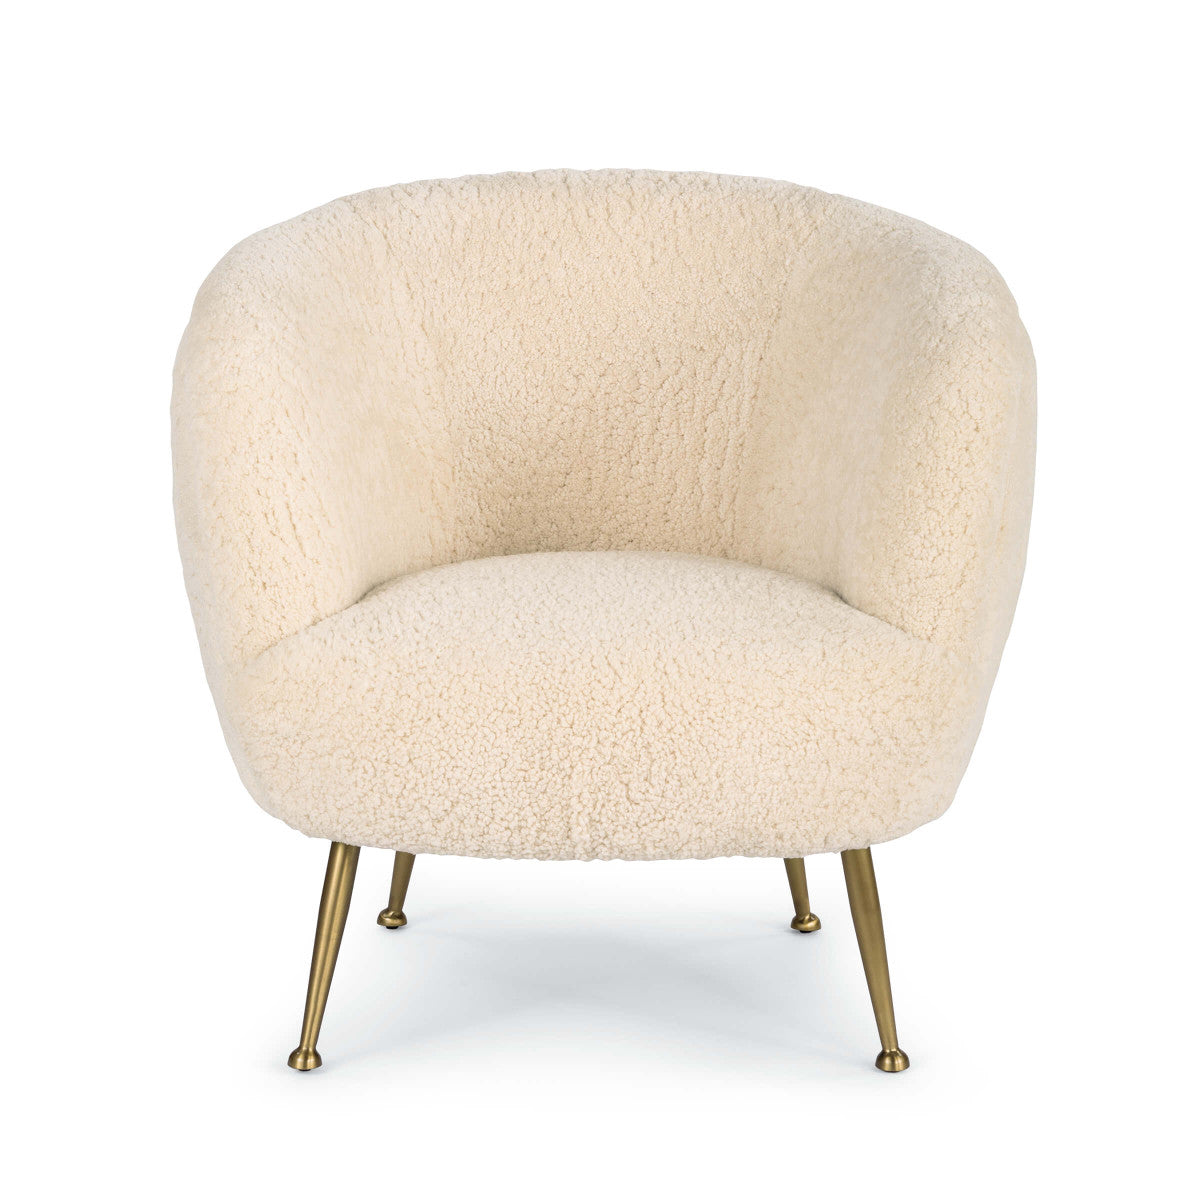 Beretta Leather Chair - Sheepskin